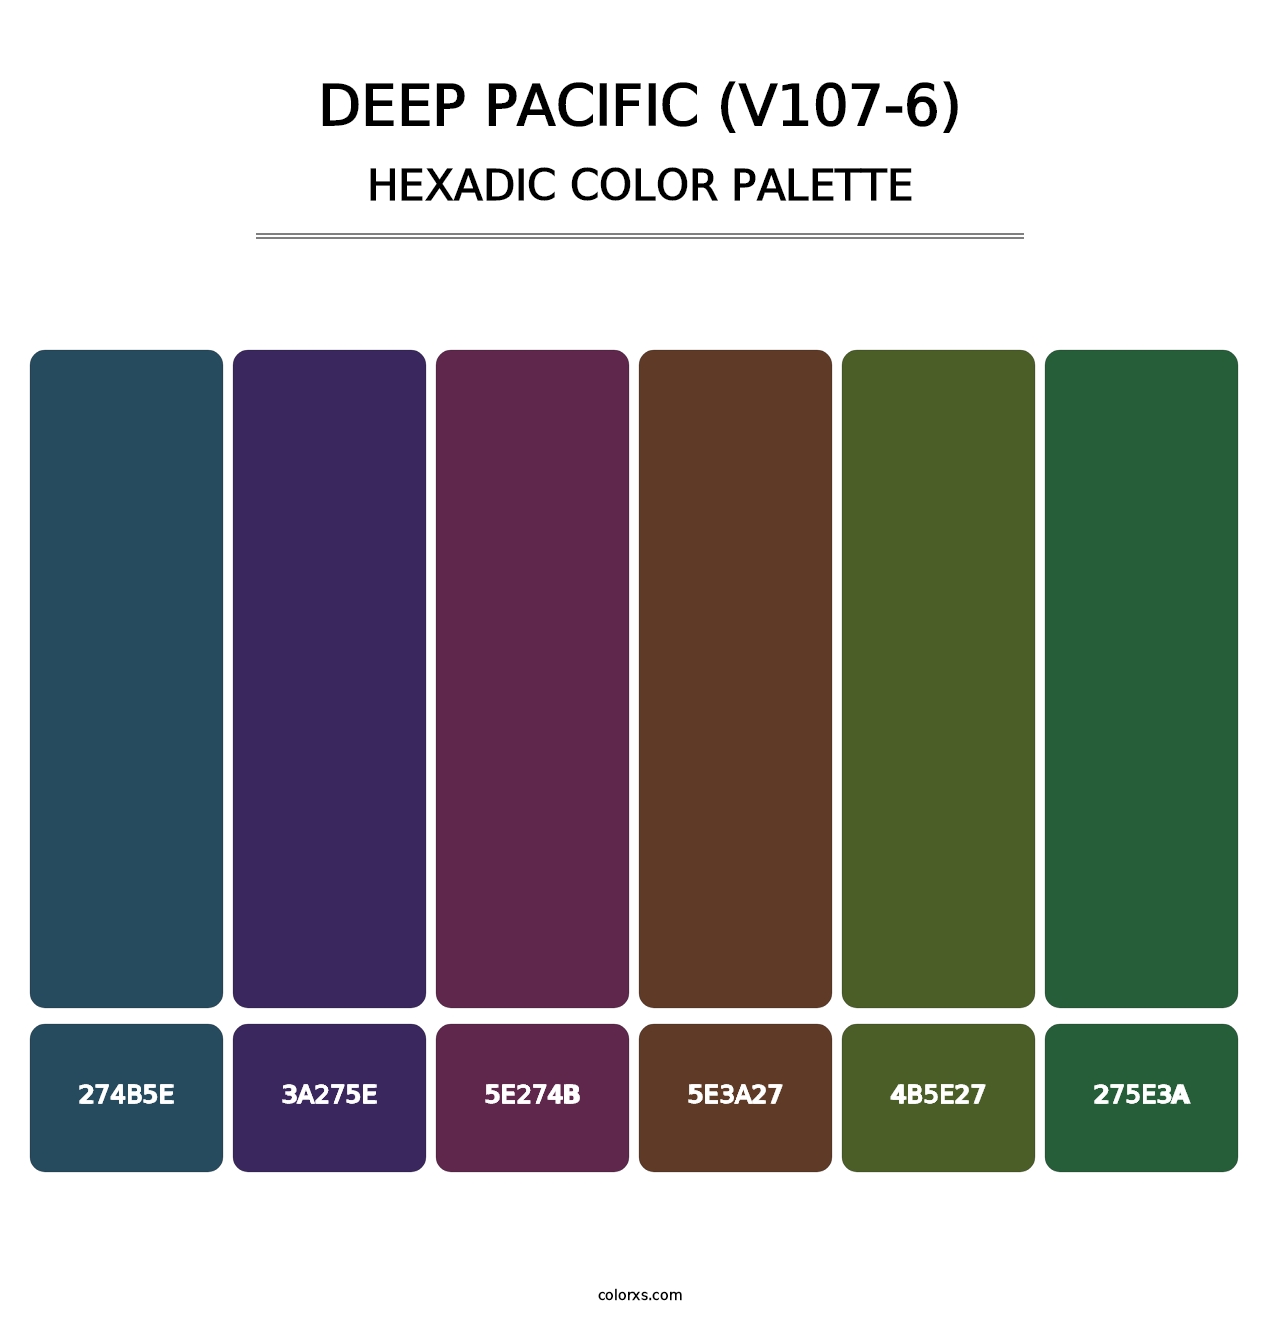 Deep Pacific (V107-6) - Hexadic Color Palette